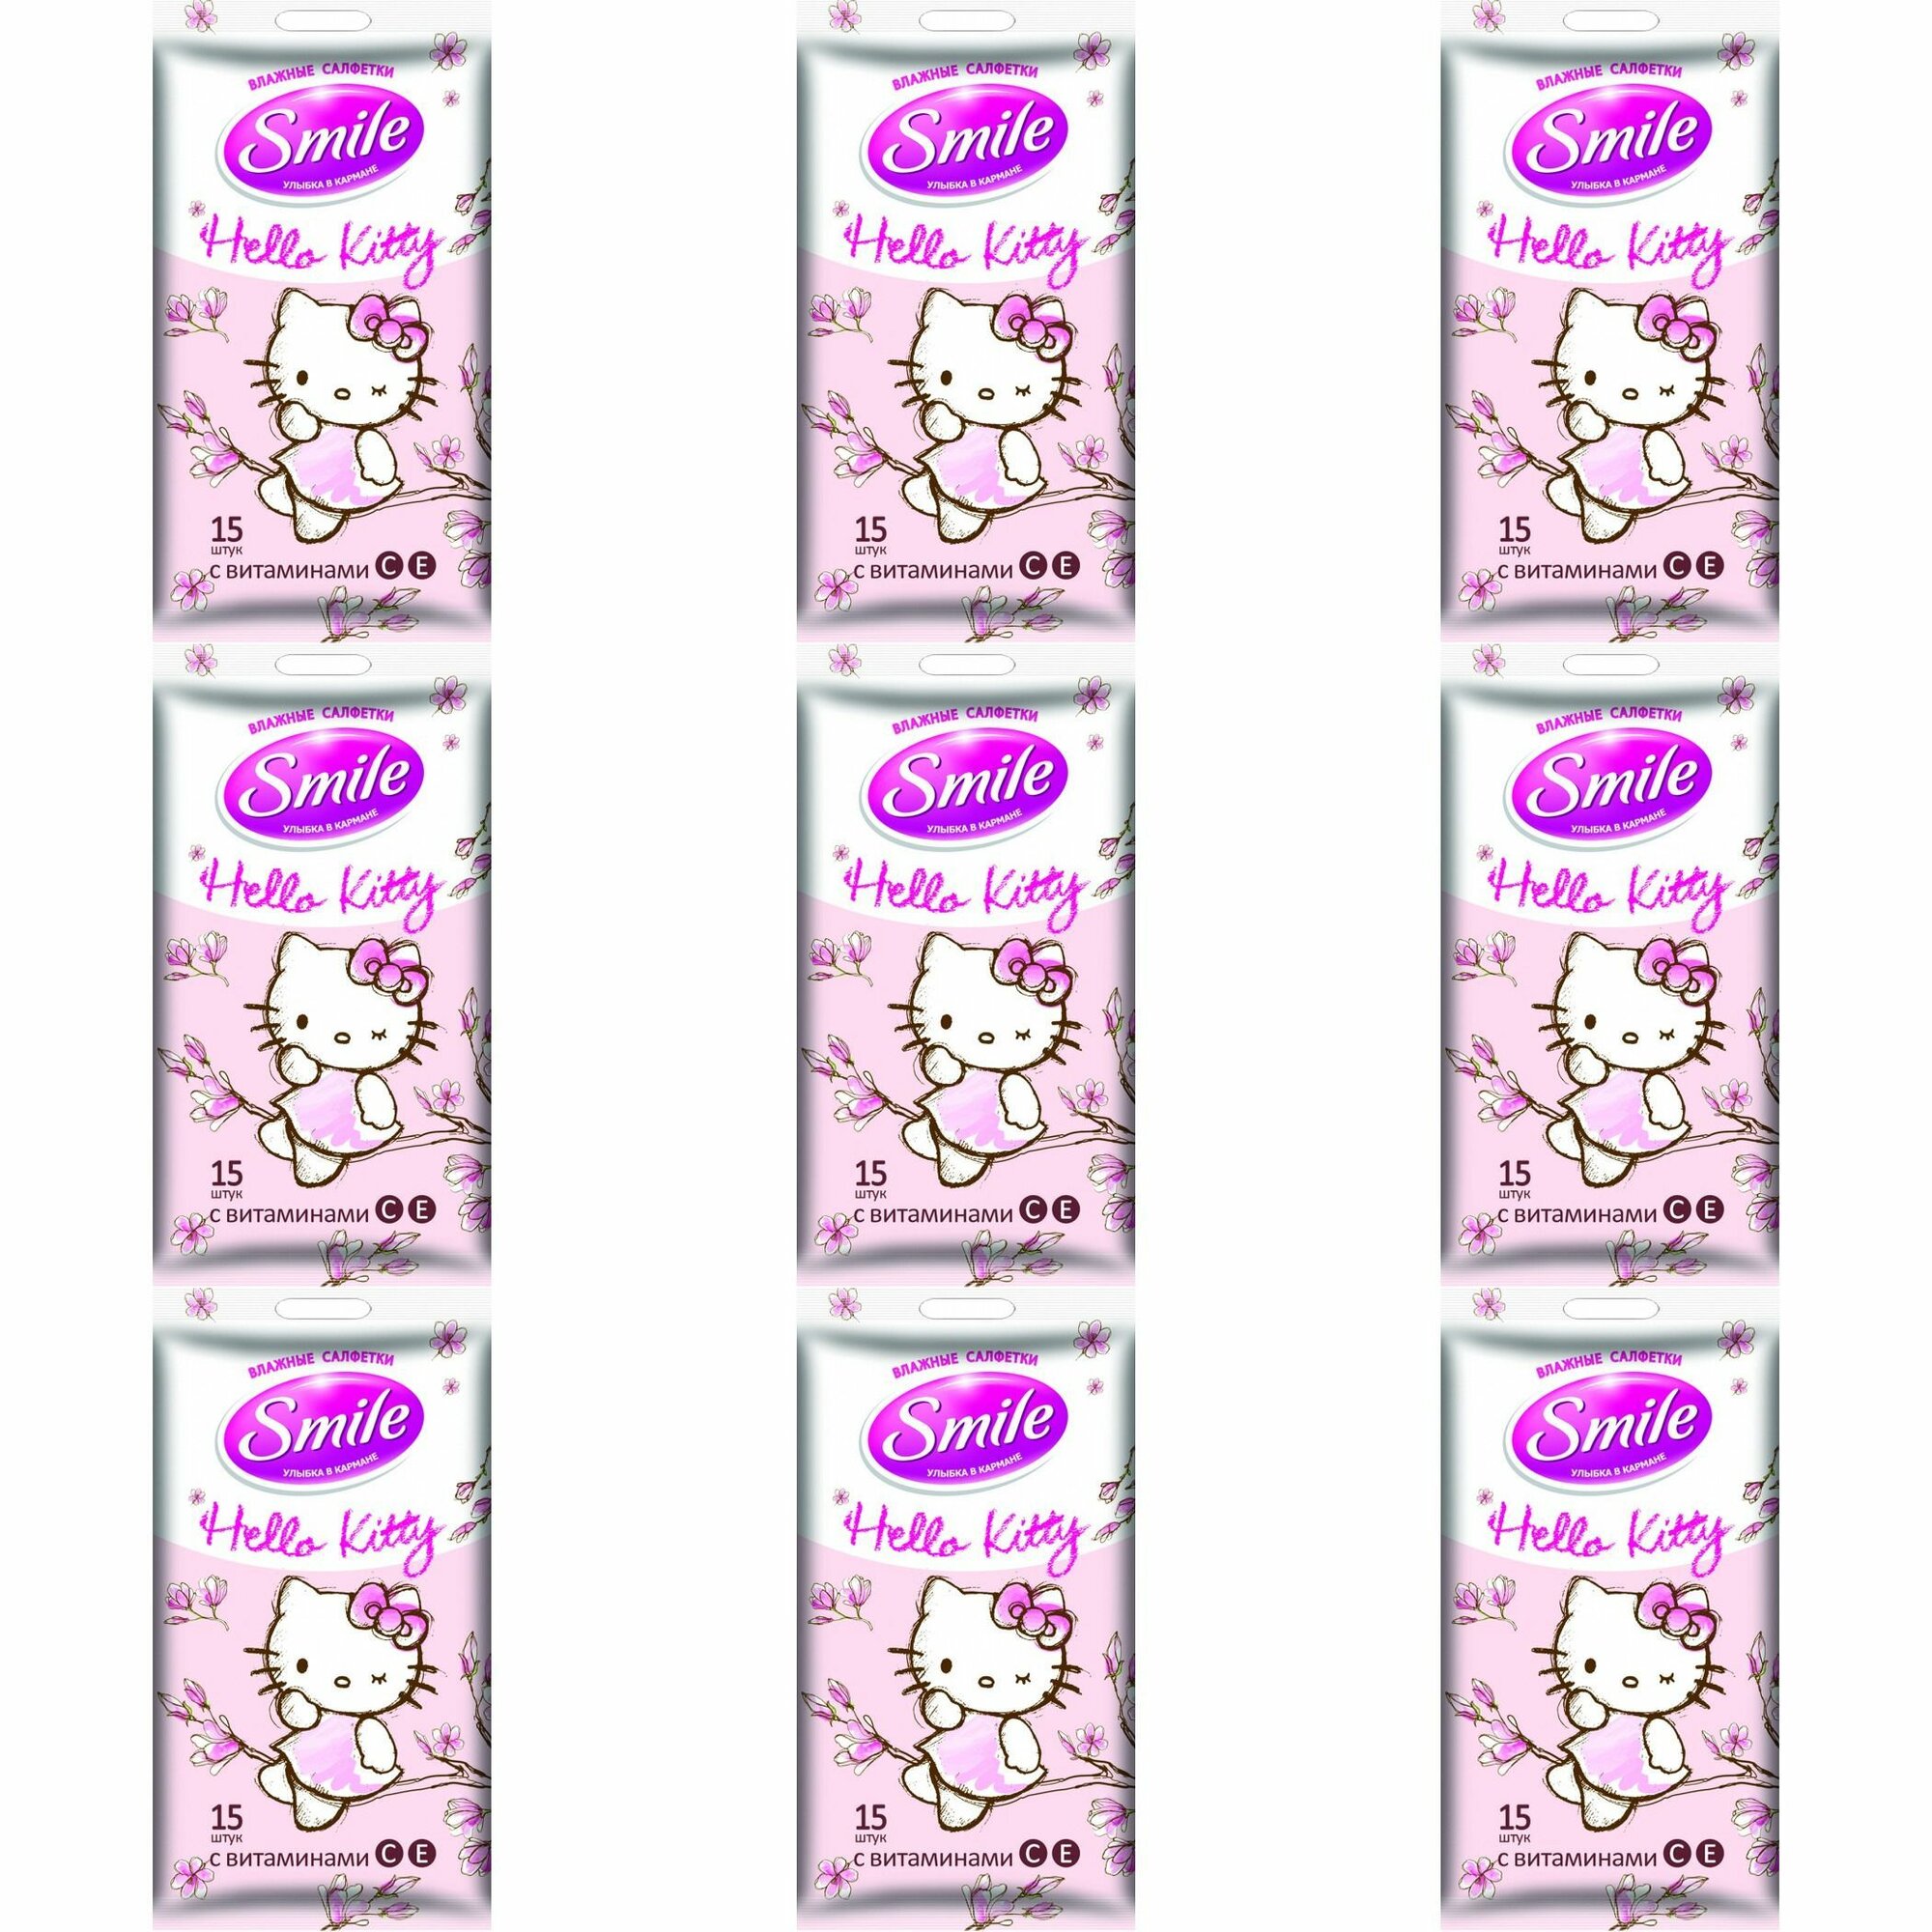 Ultra Fresh Салфетки влажные косметические, Premium Hello Kitty, 15 штук, 9 упаковок